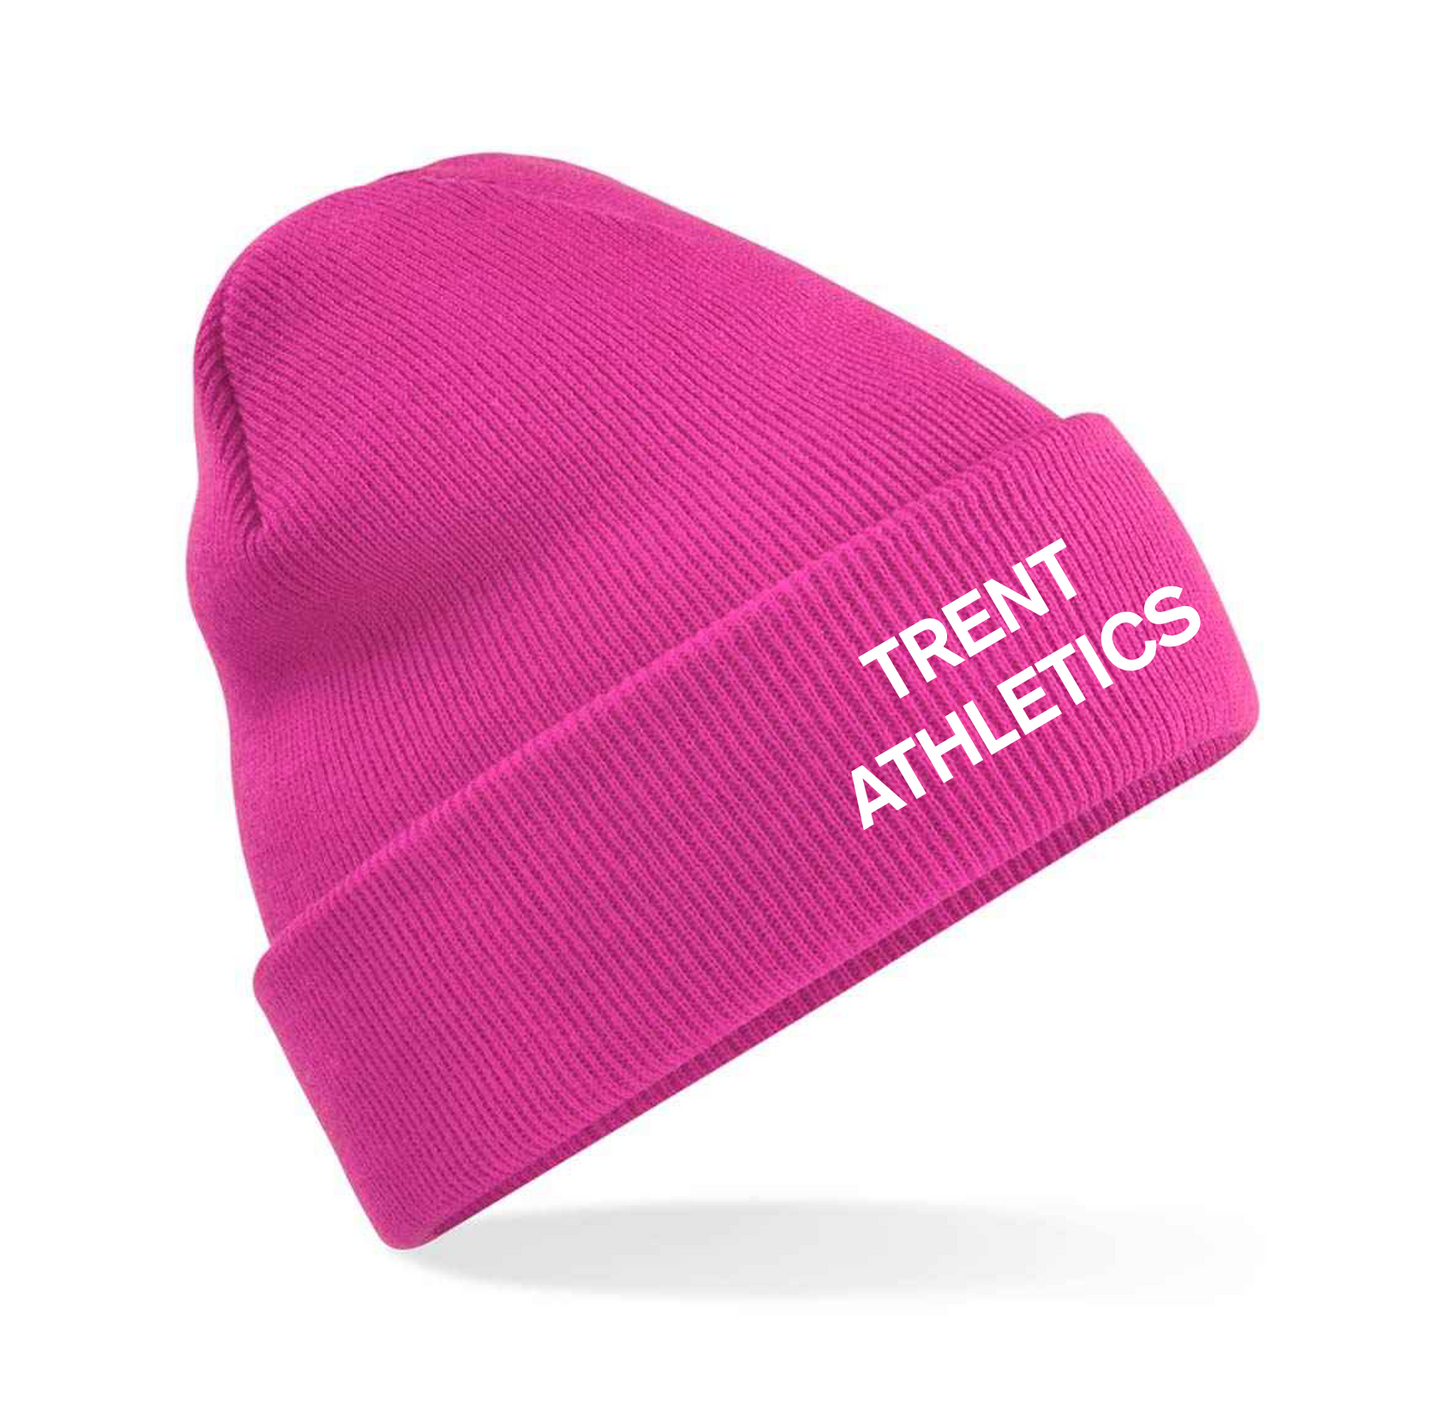 NTU Athletics Beanie Hat